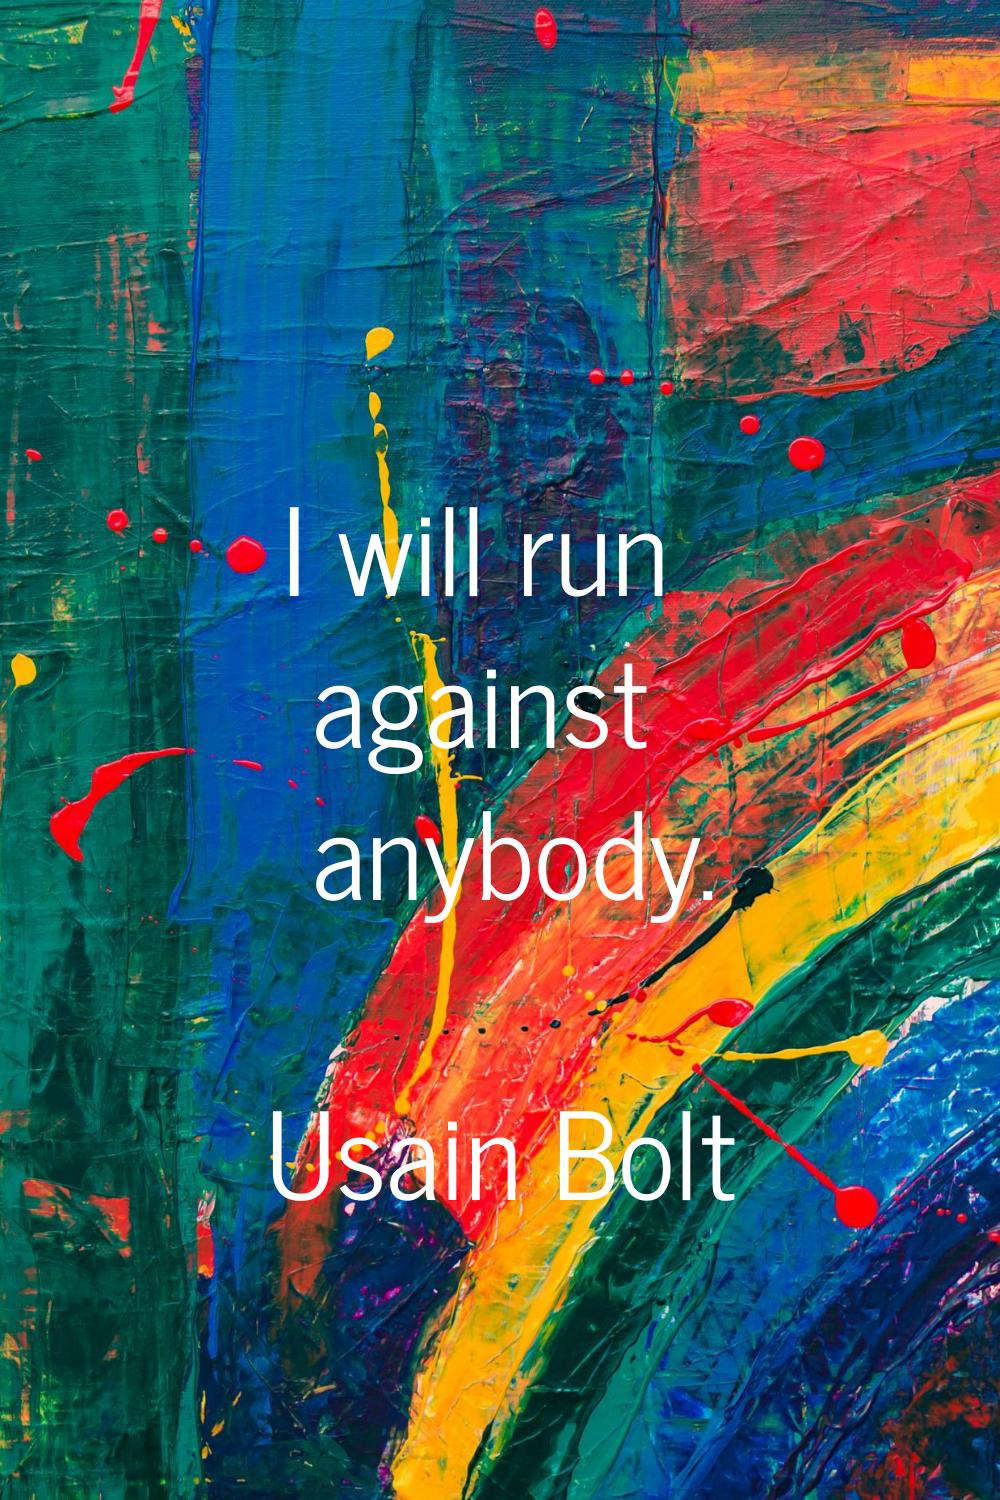 I will run against anybody.